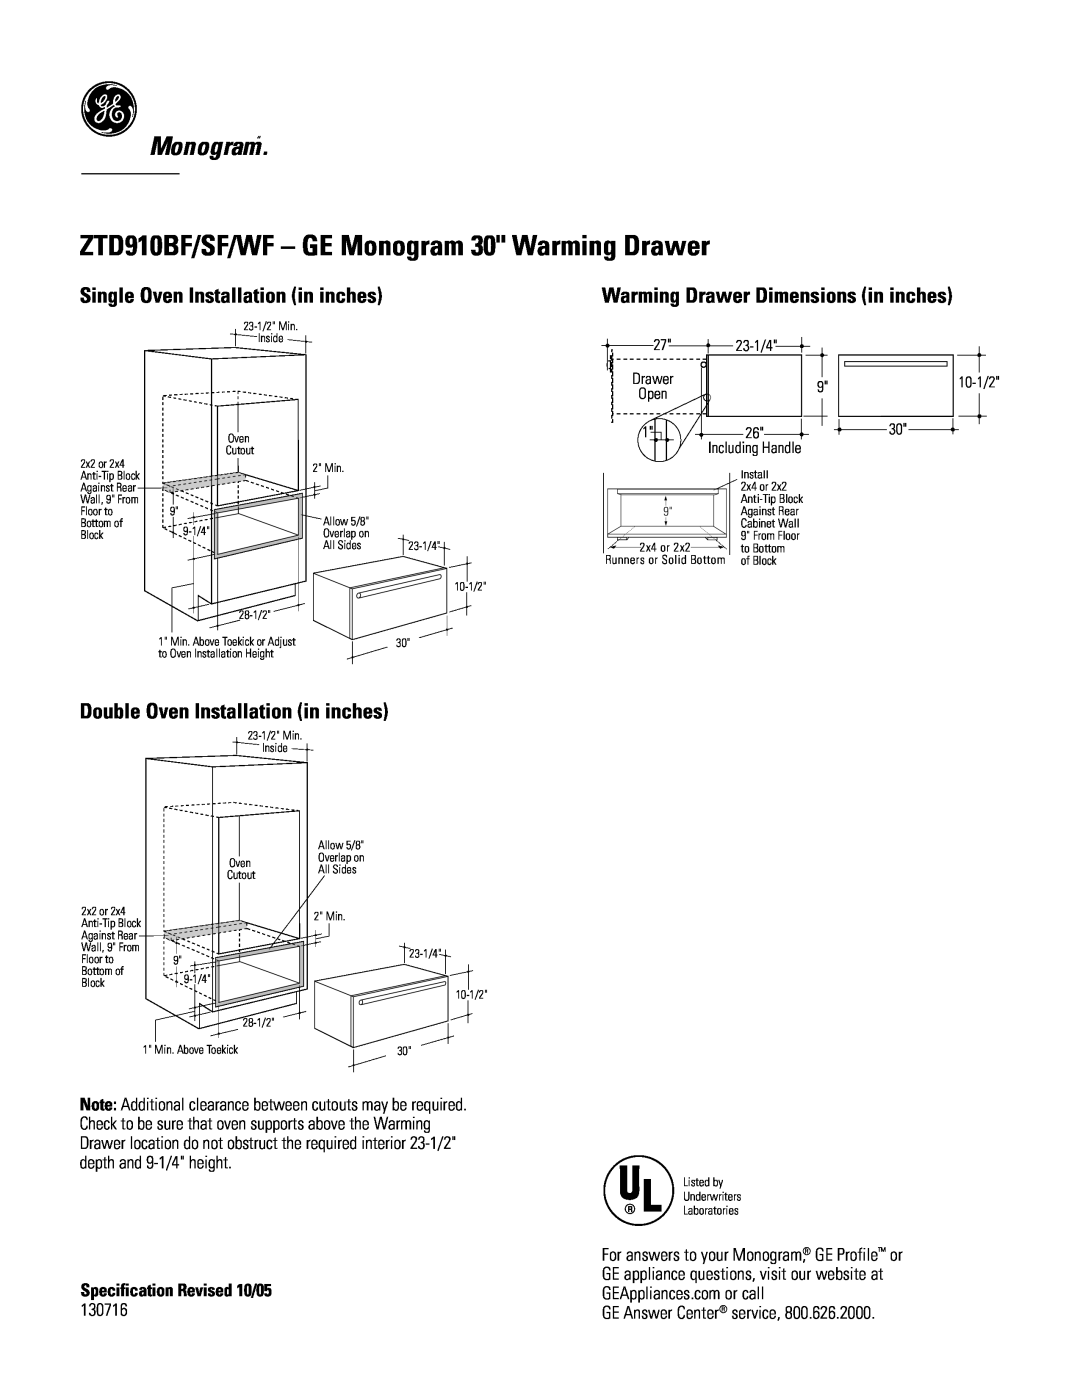 GE dimensions ZTD910BF/SF/WF - GE Monogram 30 Warming Drawer, Monogram“, Single Oven Installation in inches, 23-1/4 